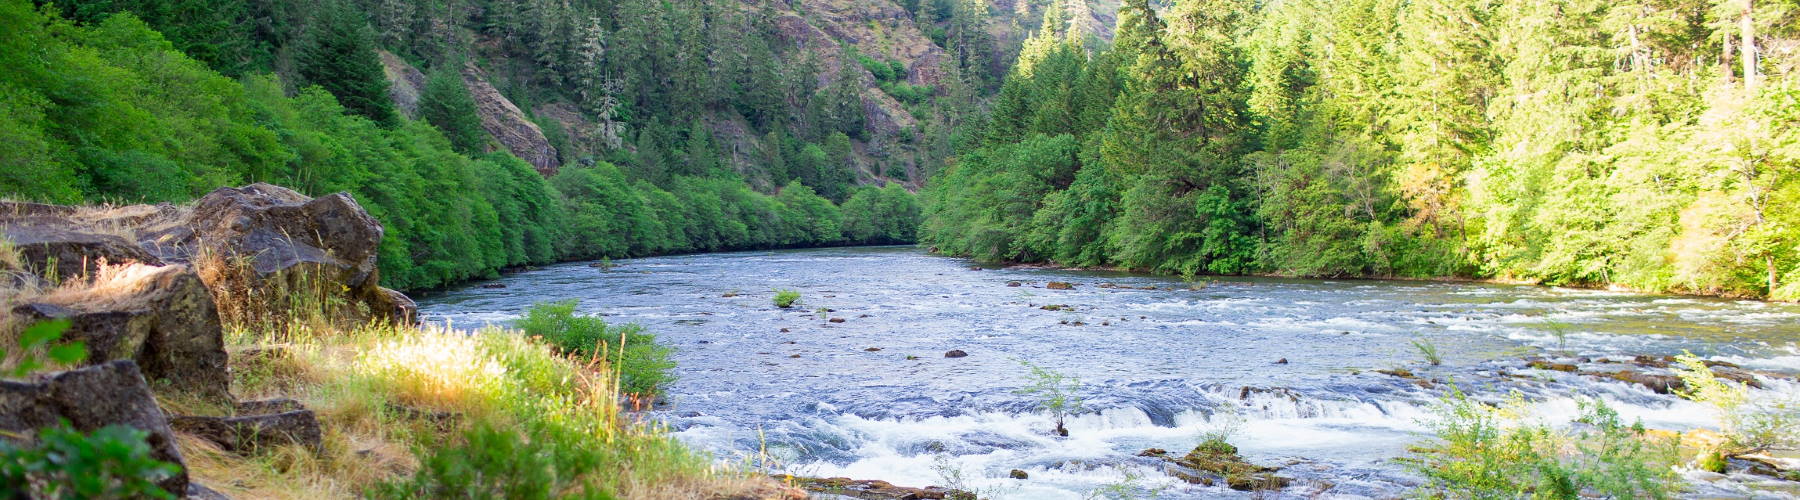 River in setting in Colorado